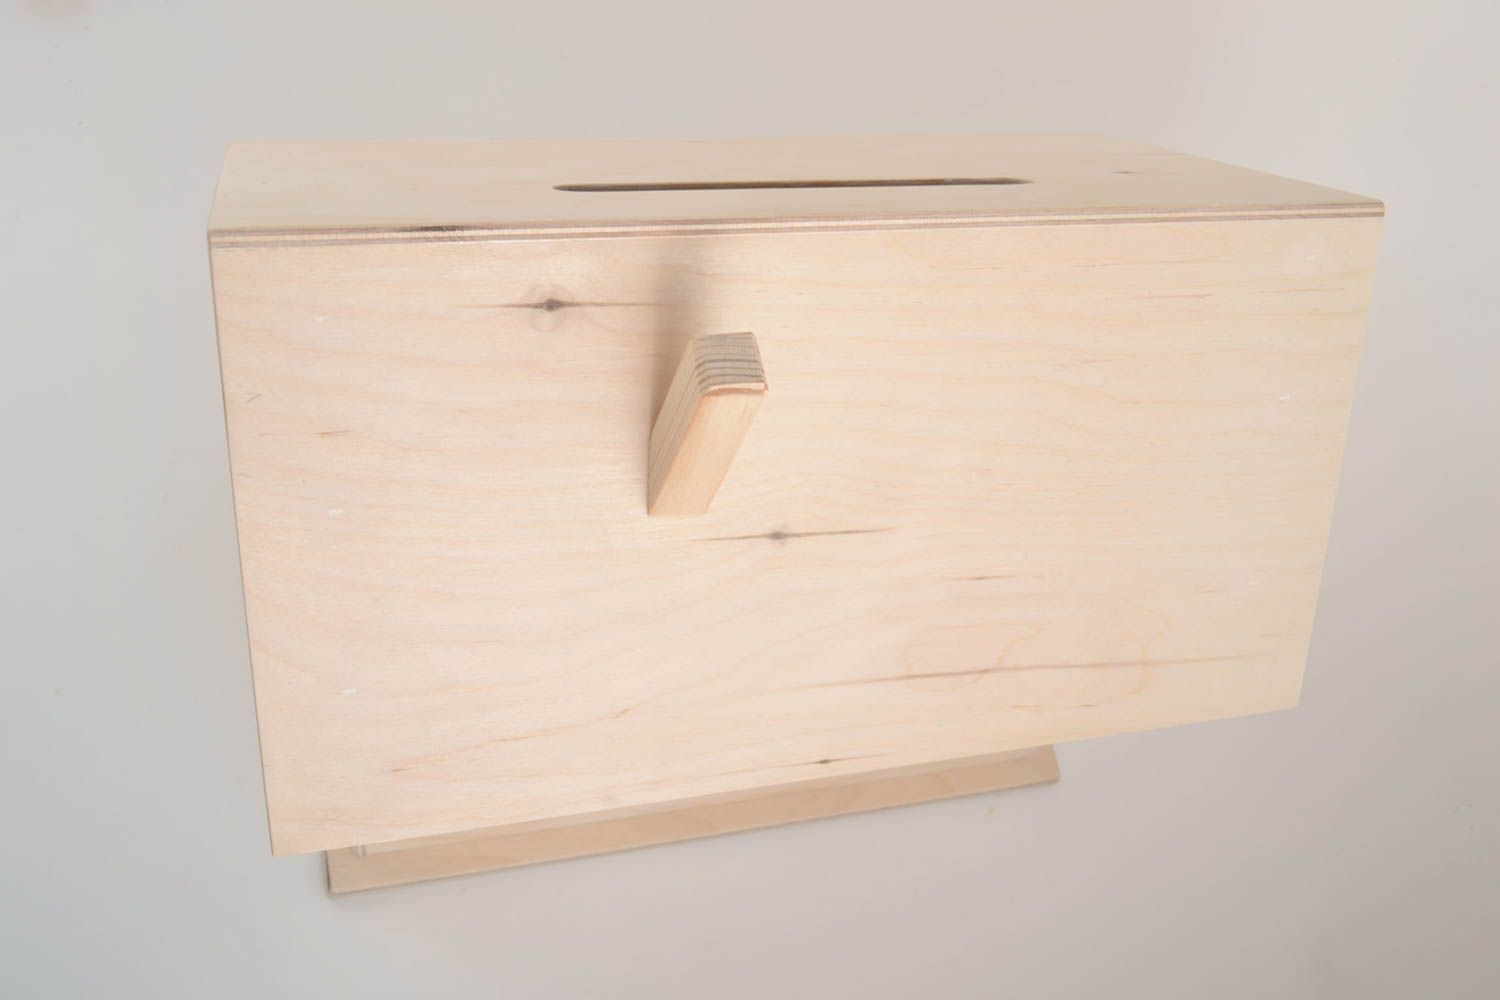 Unusual handmade wooden box plywood blank letter box blanks for creativity photo 4